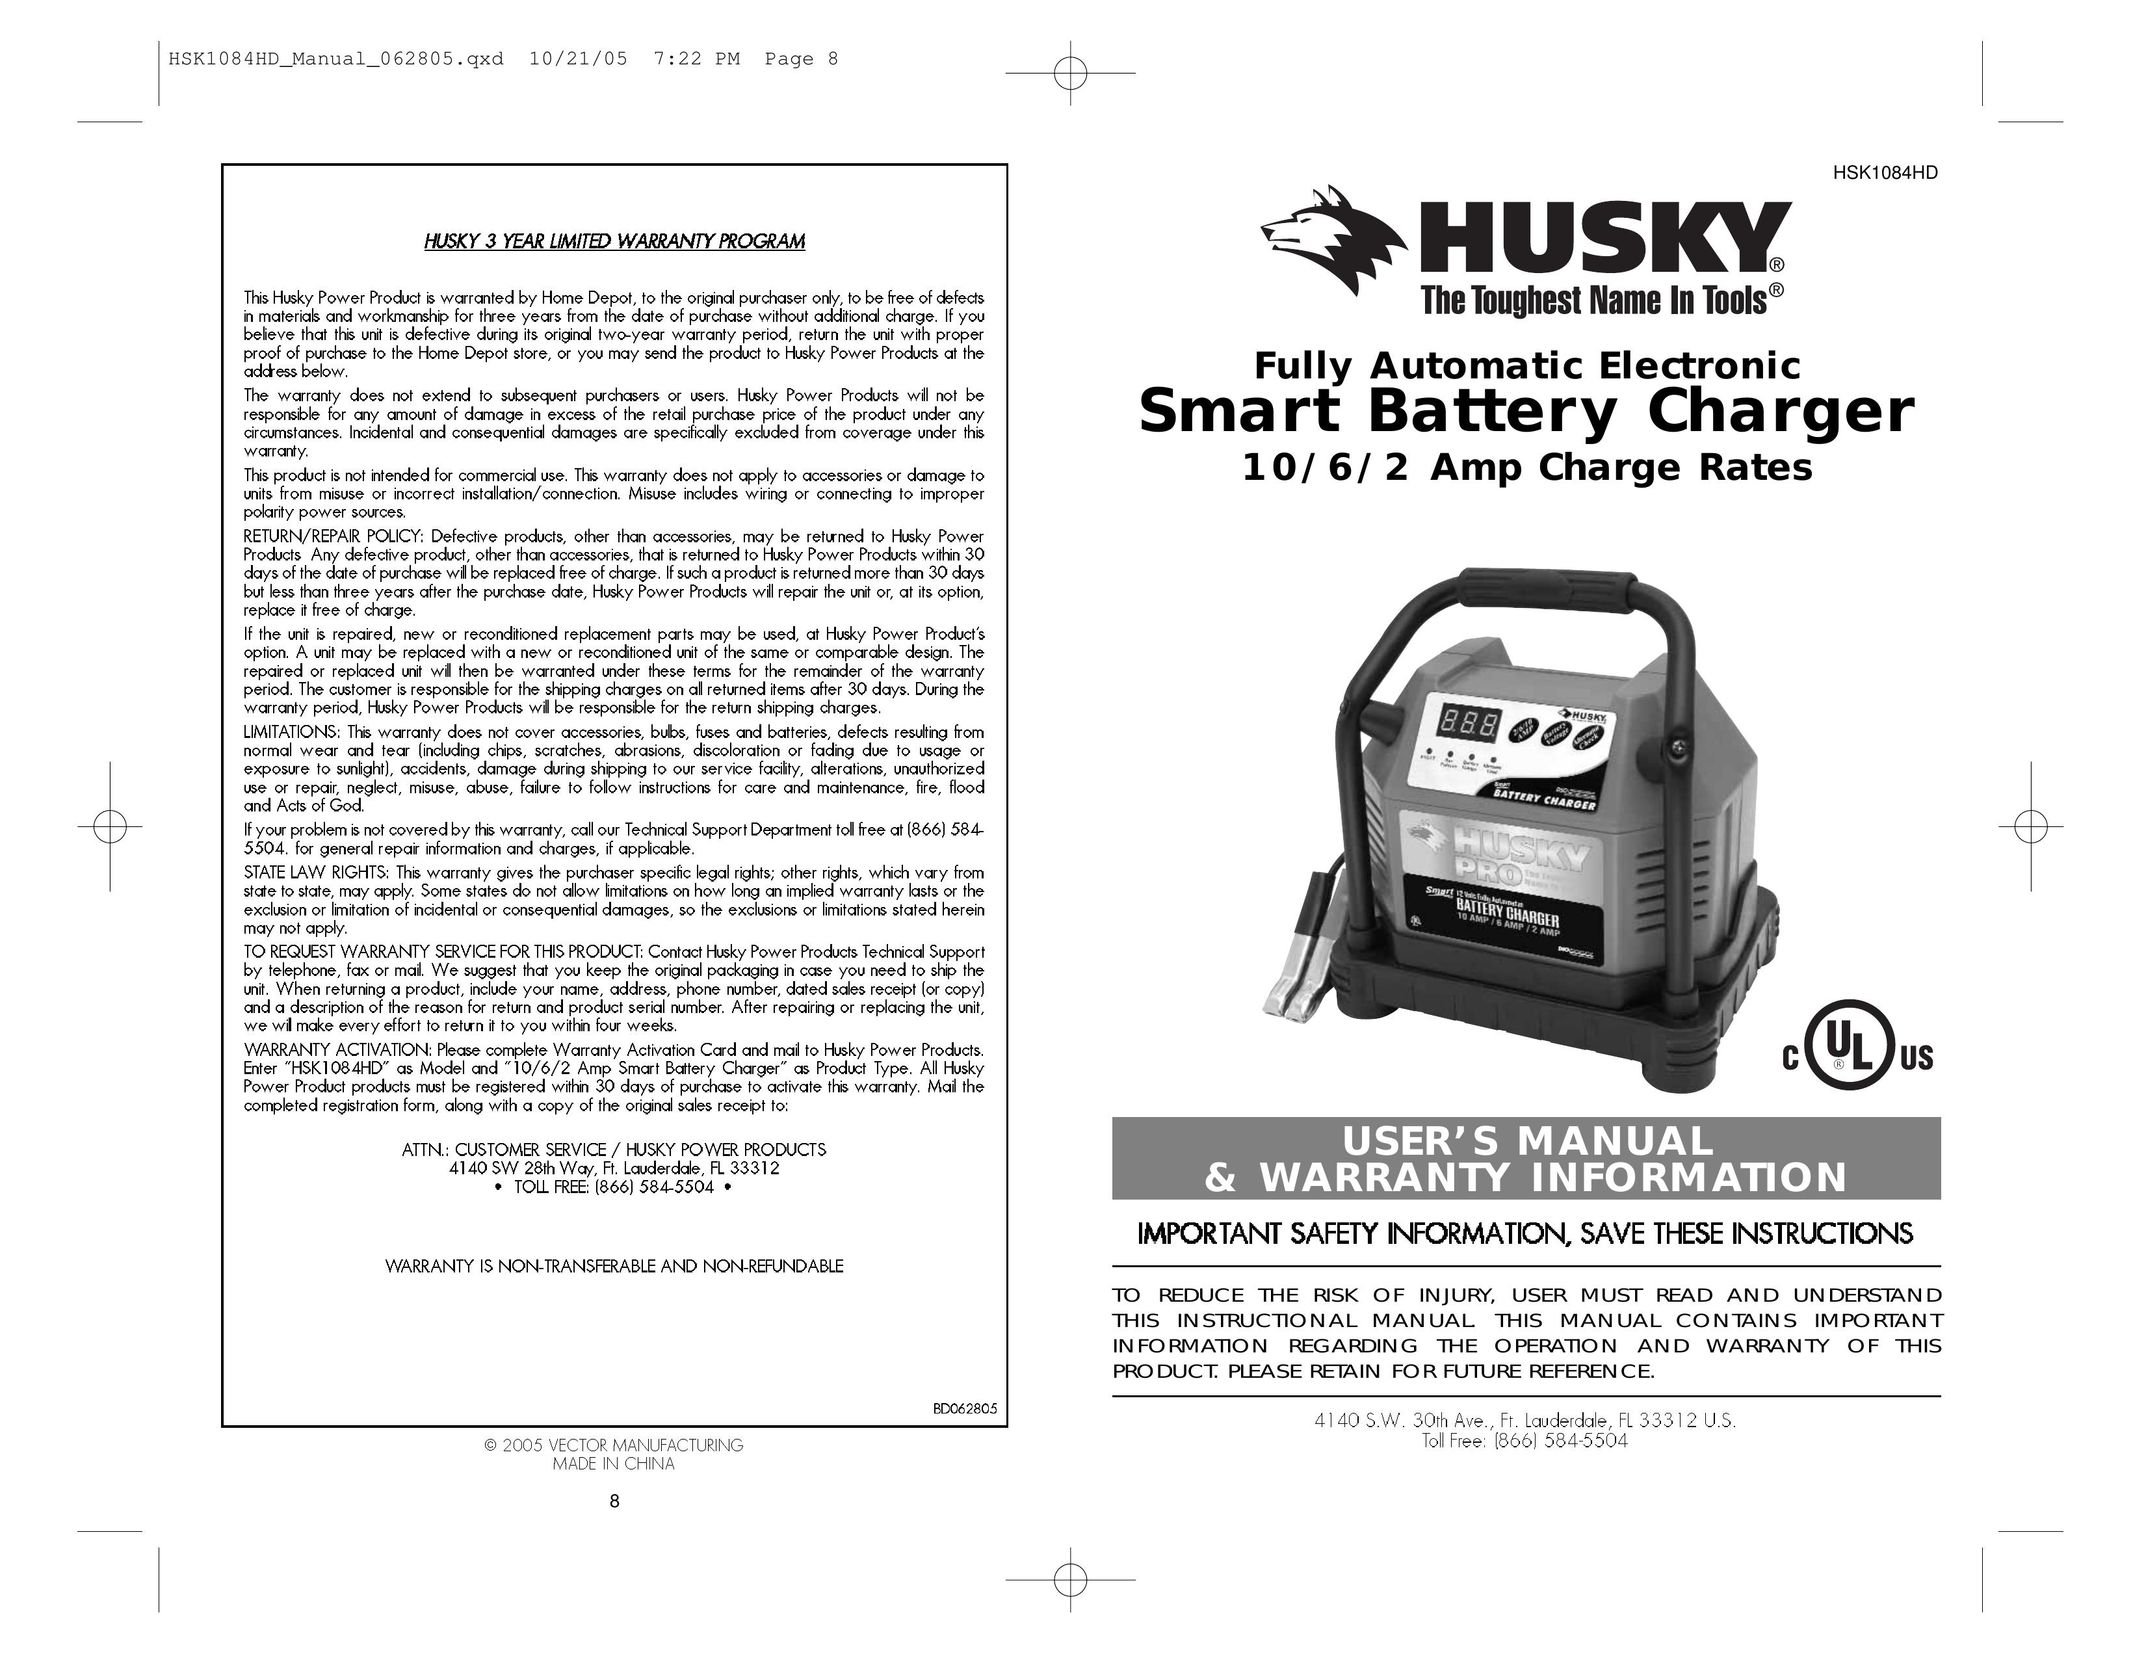 Husky HSK1084HD Battery Charger User Manual